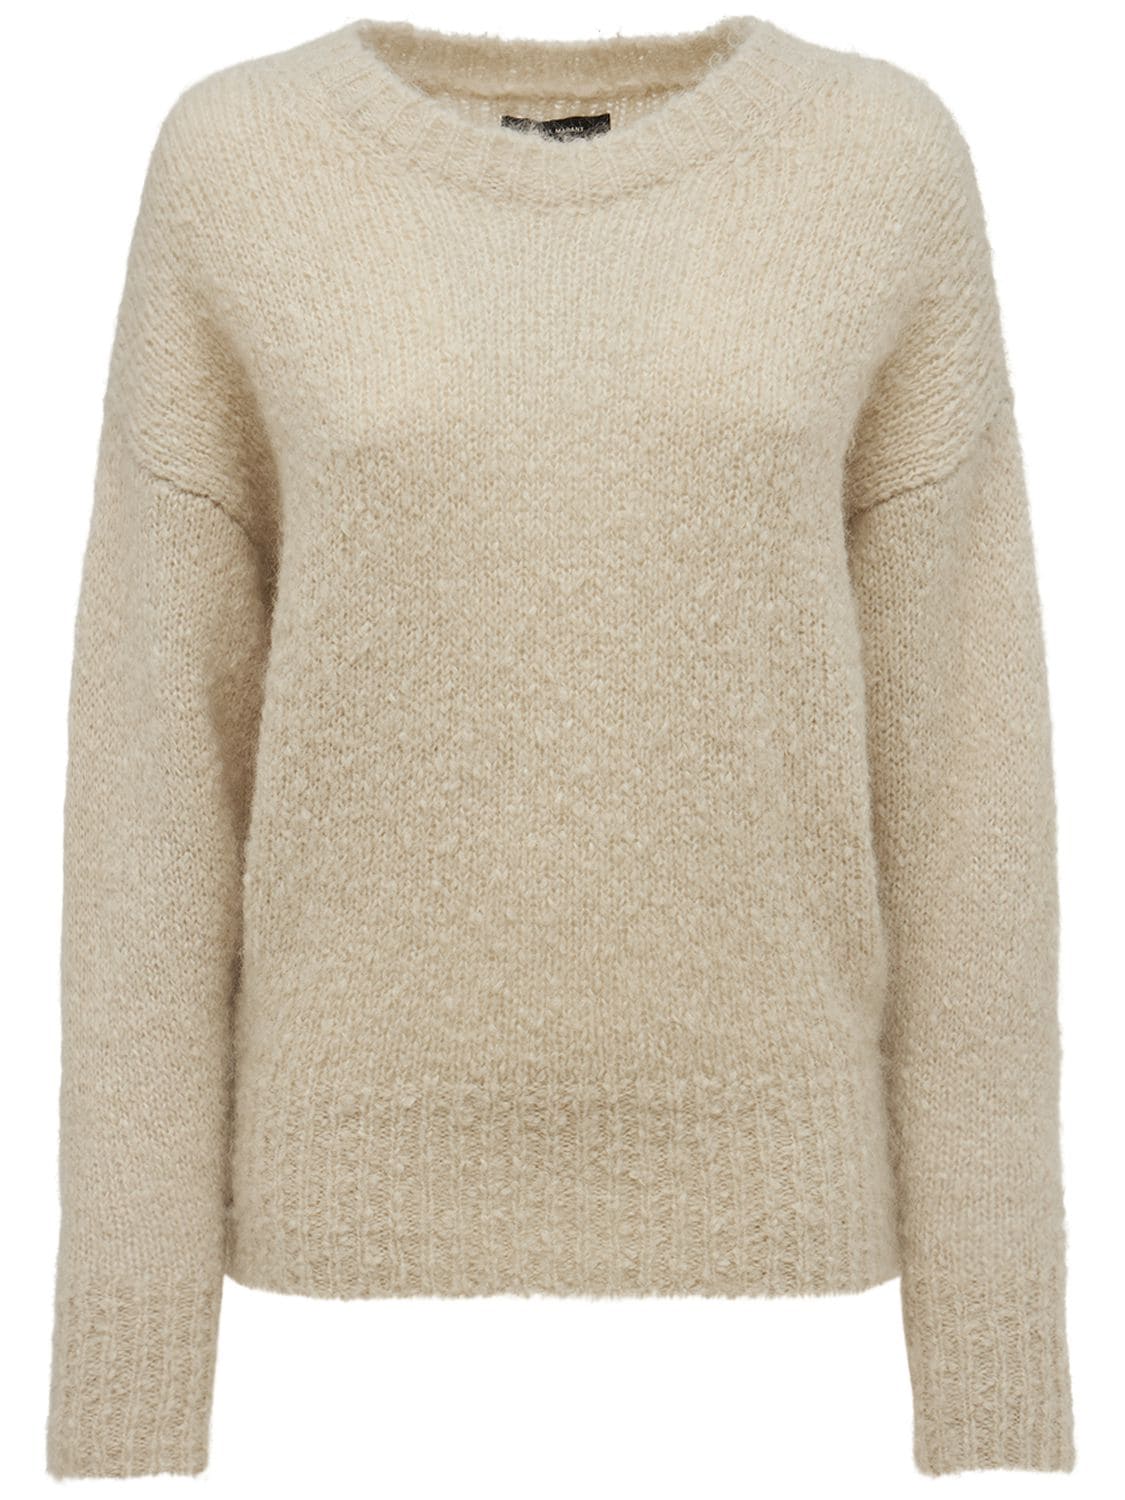 Estelle Knit Mohair Blend Sweater